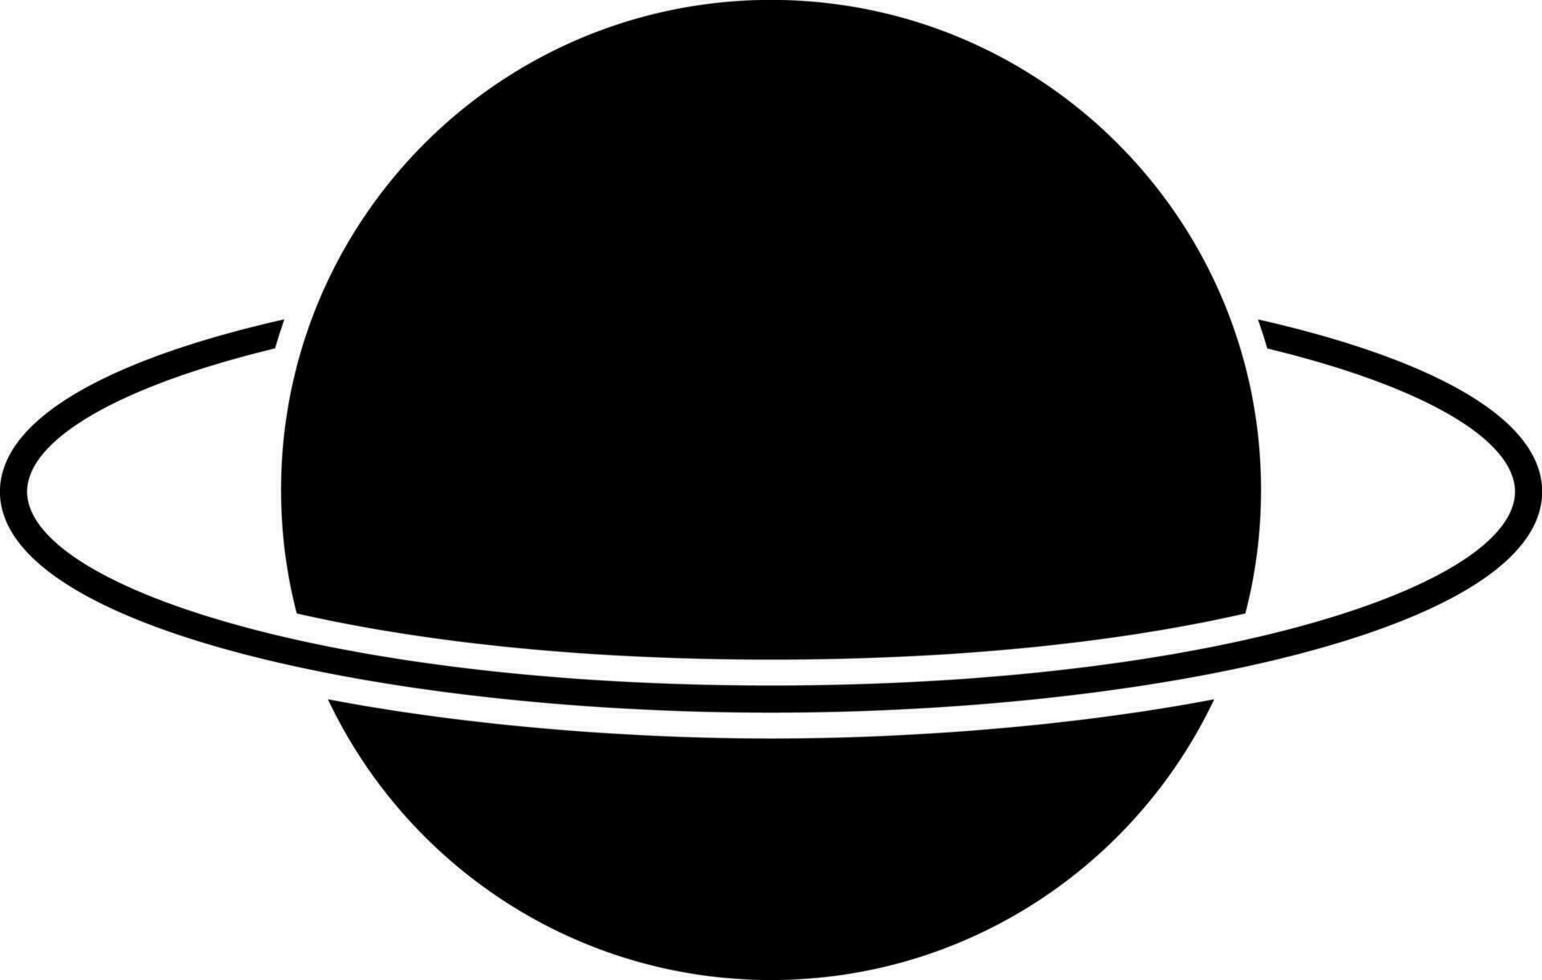 svart planet ikon på vit bakgrund. vektor